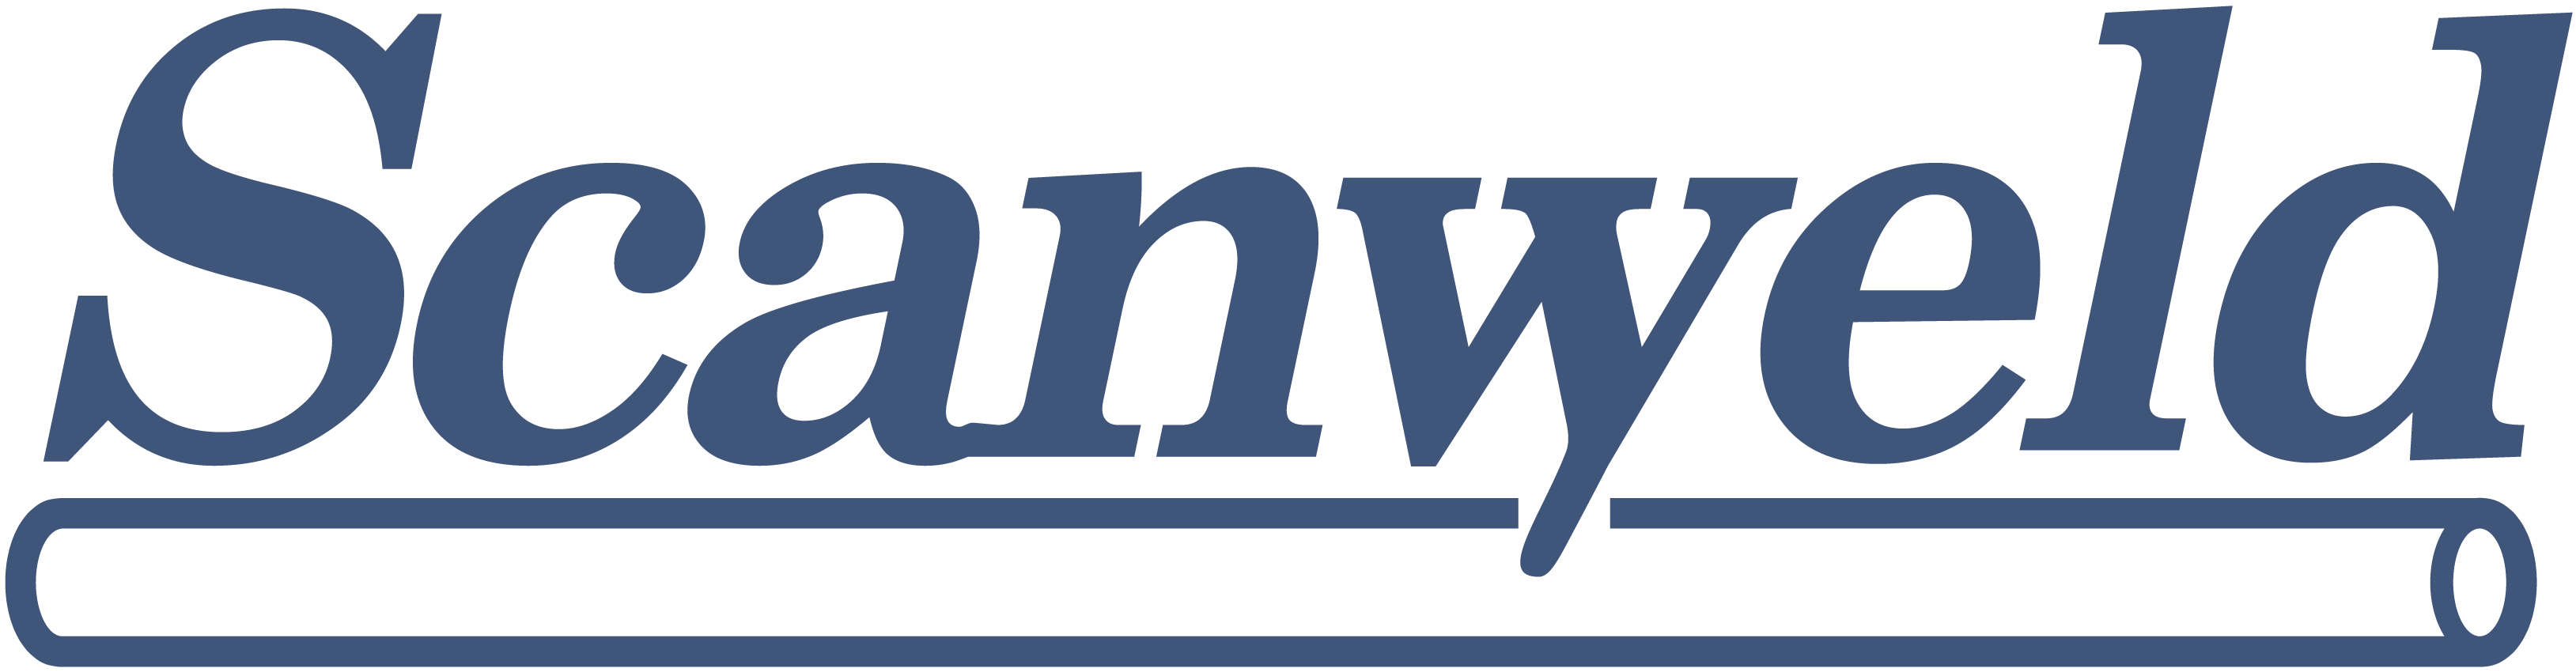 Scanweld logo copy